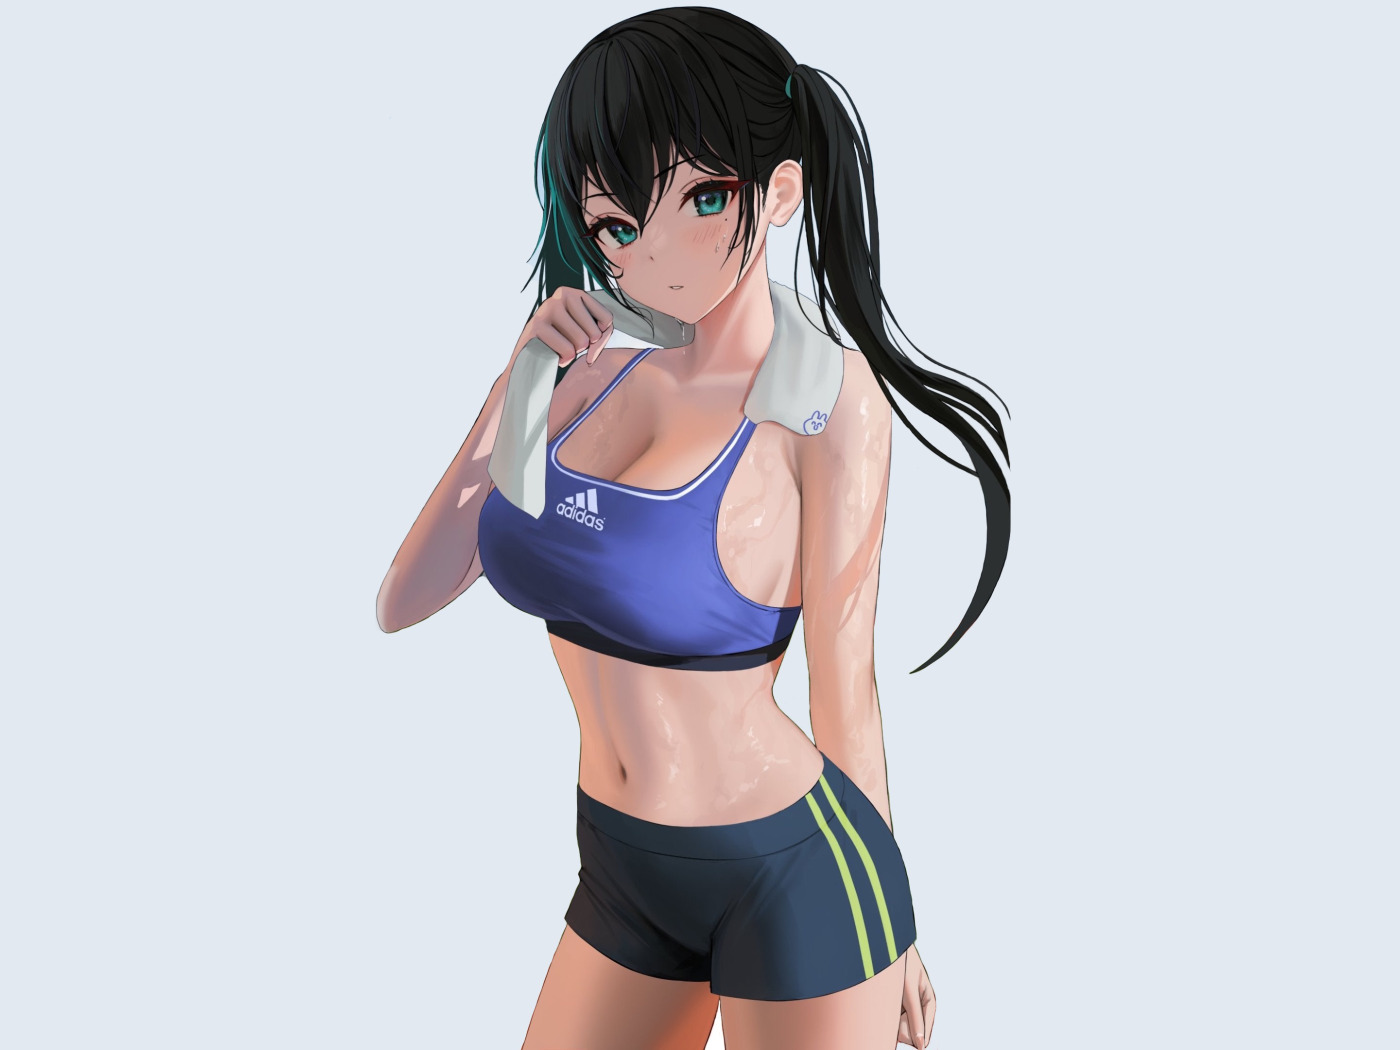 sexy anime girl in sports bra sweating (subs plz) by kazuma0000 on  DeviantArt